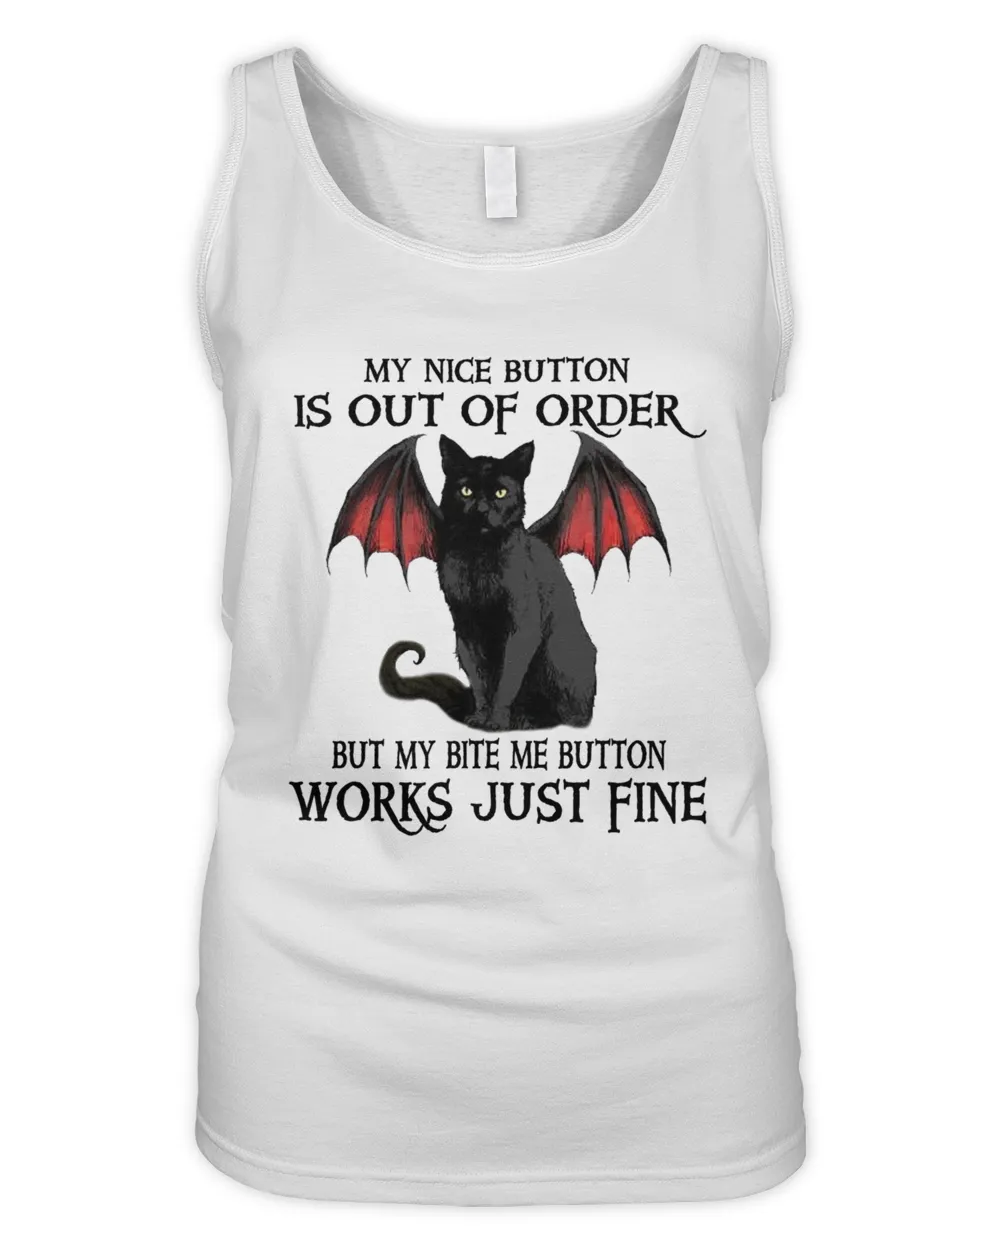 Black Cat My Bite Me Button Works Just Fine Kitty Kitten